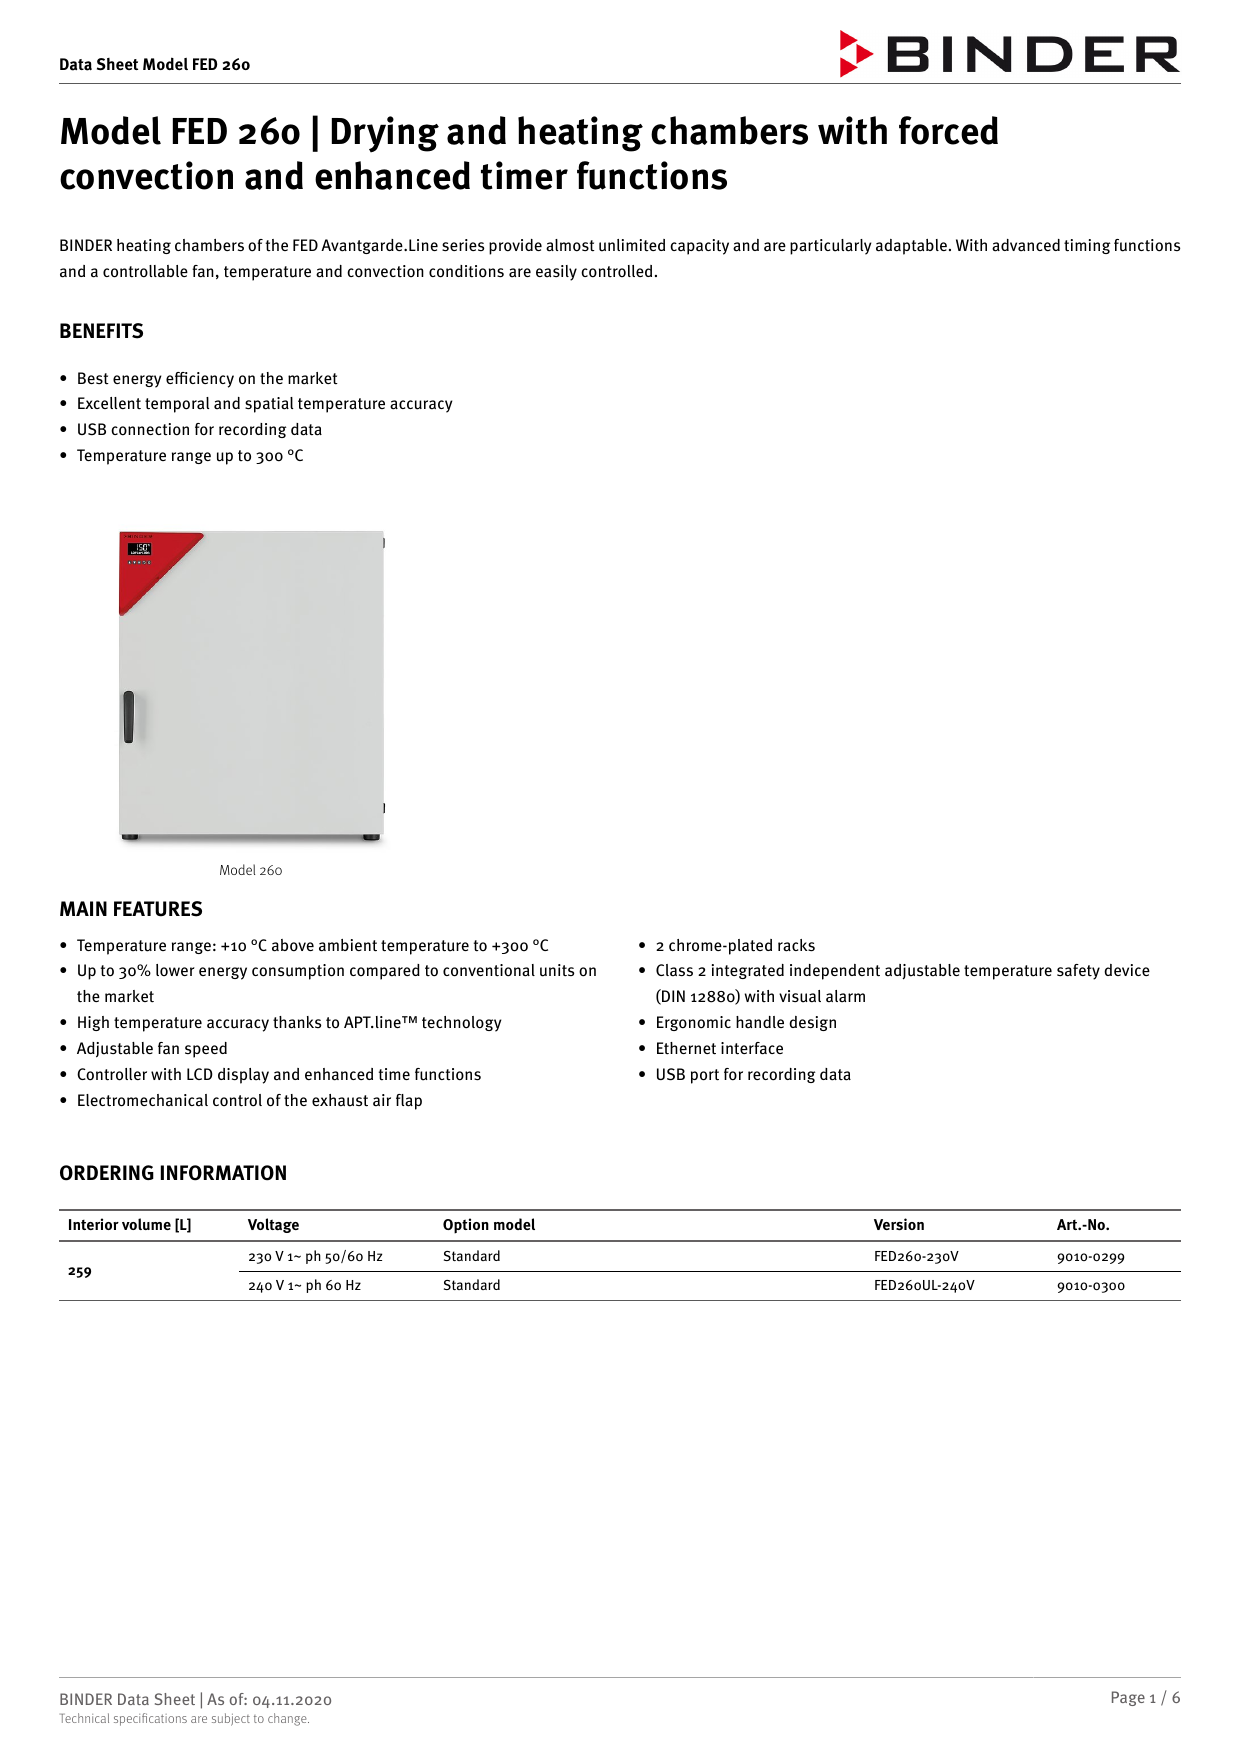 Binder 9010-0299 FED 260 Drying & Heating Chamber 230V/50-60 Hz Binder Inc 